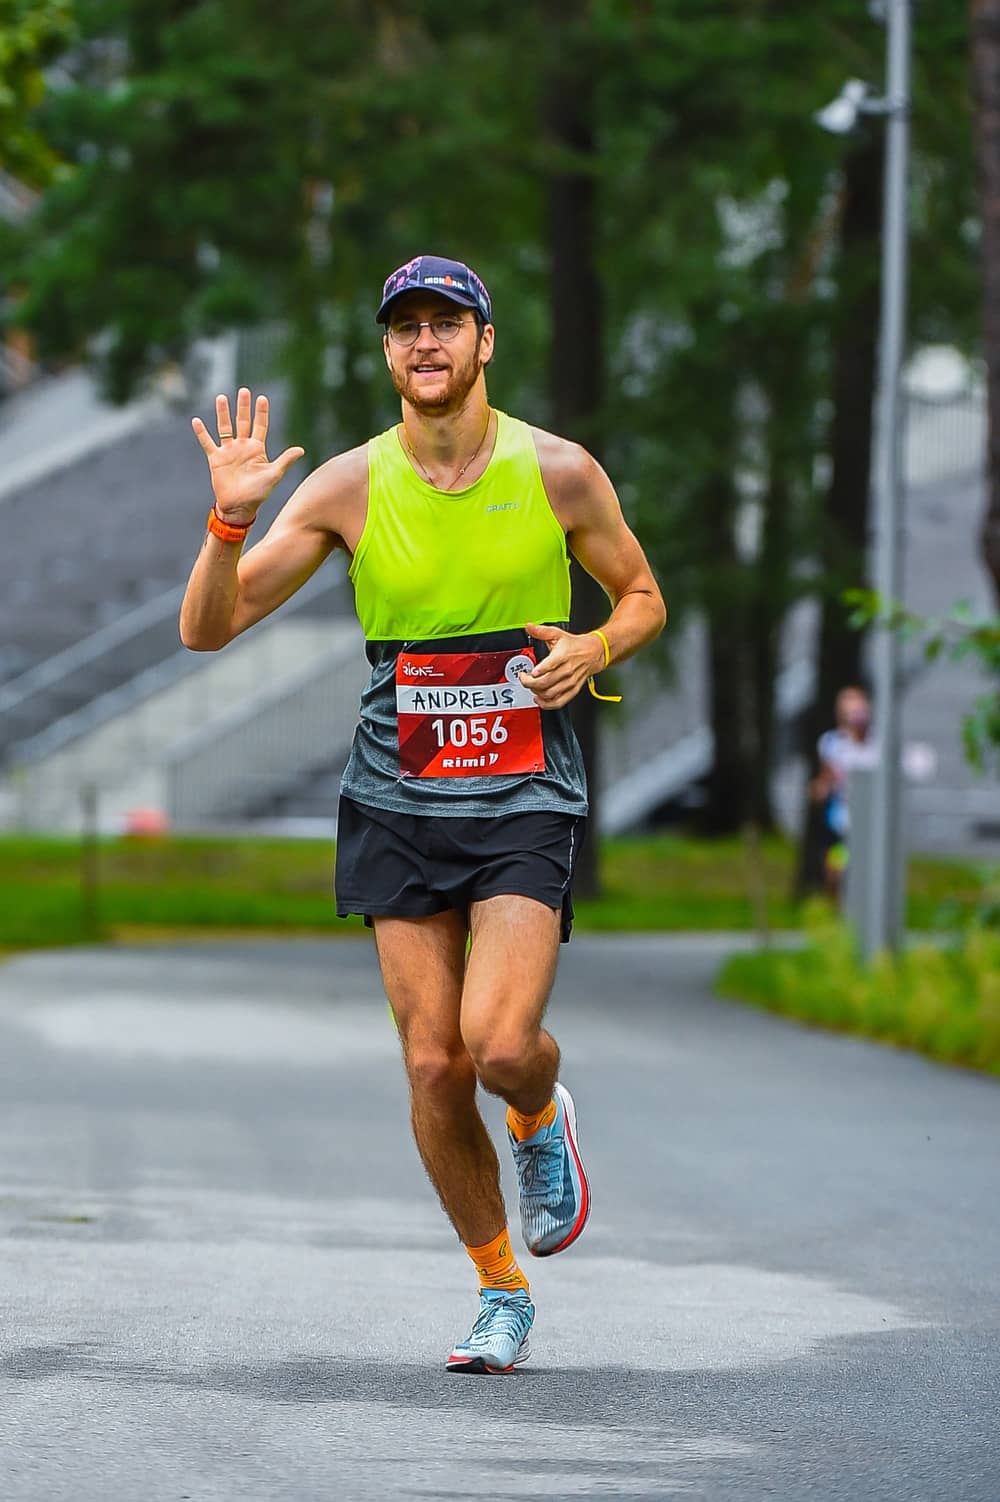 running a 3:03 marathon in Riga